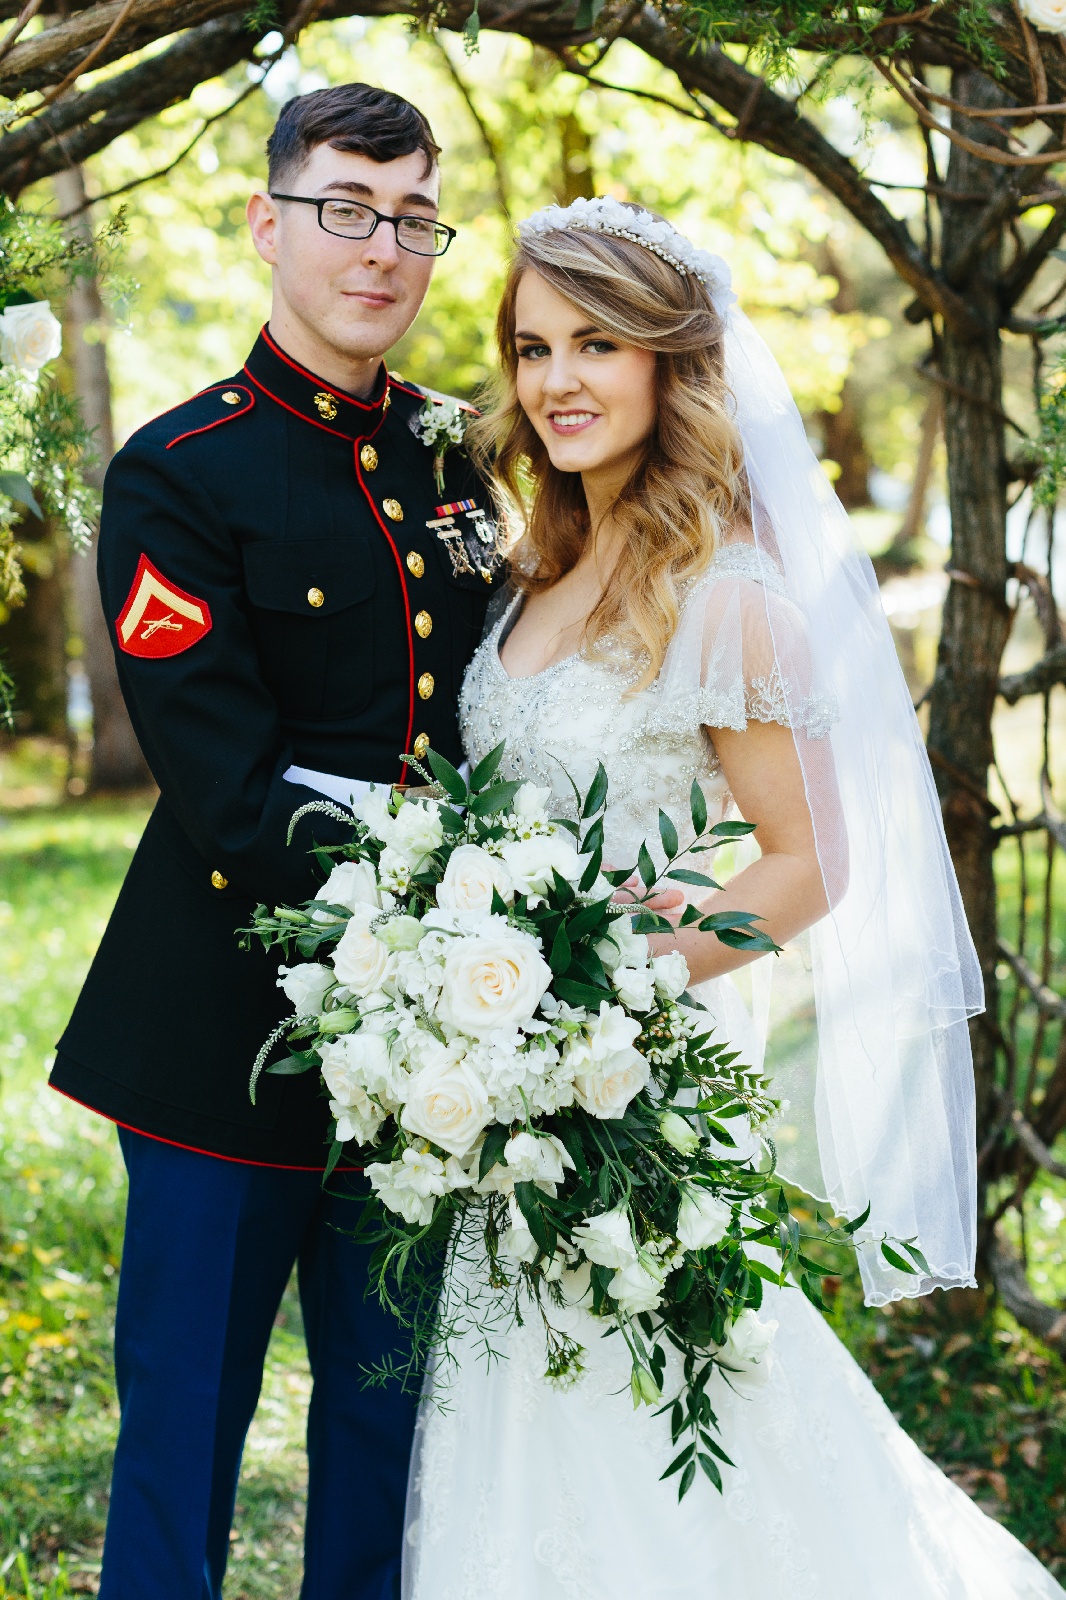 Planning Your Marine Corps Wedding?